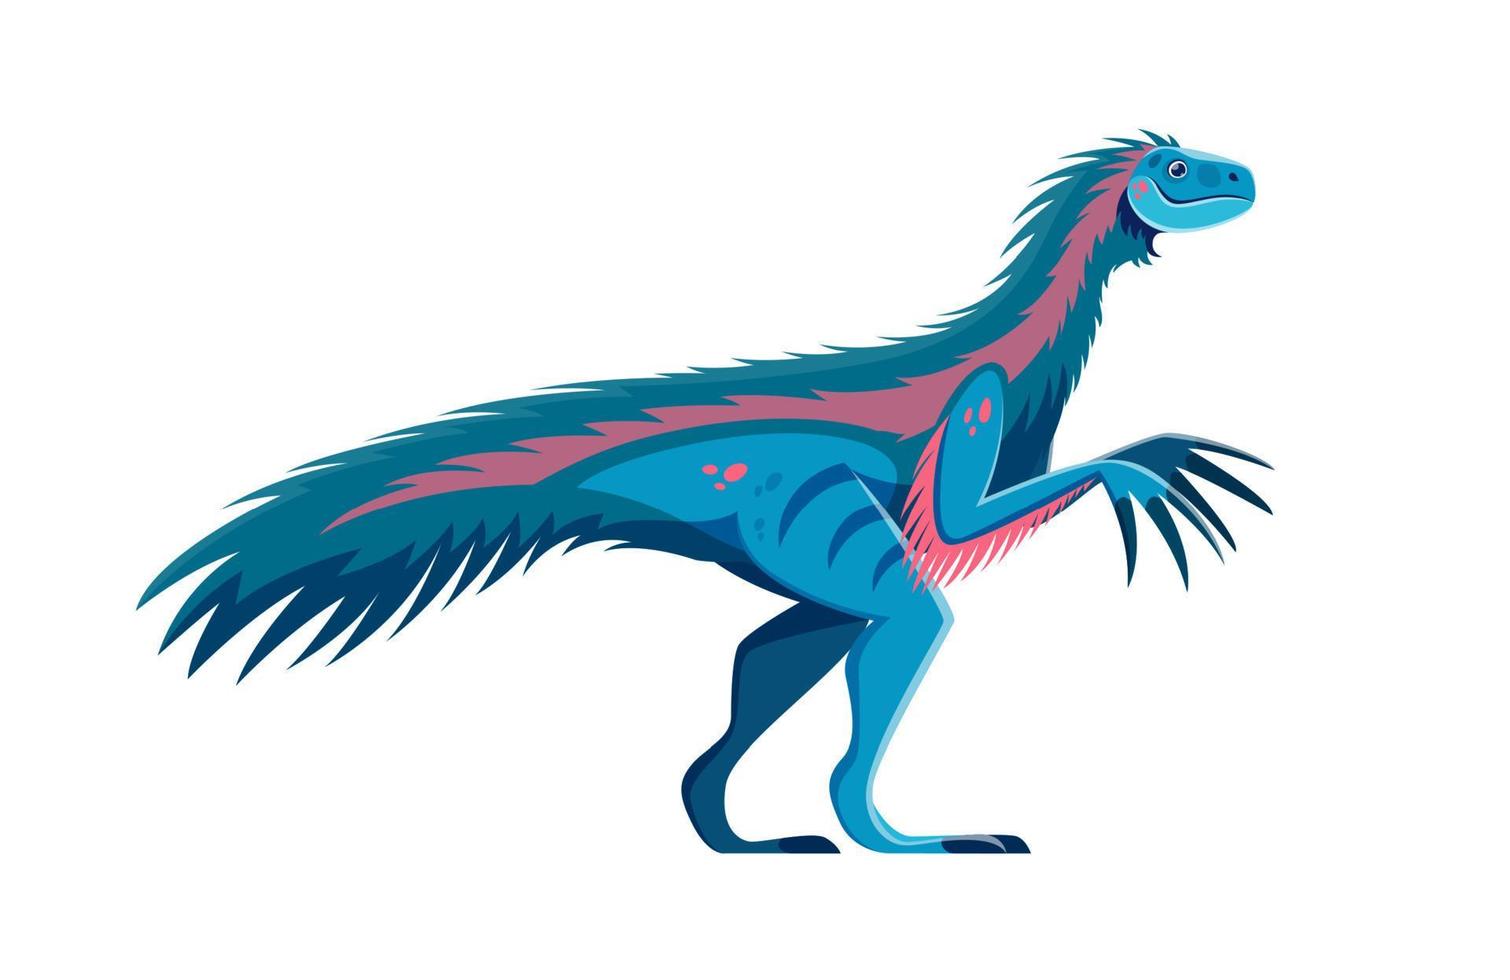 personaje divertido de dinosaurio therizinosaurus de dibujos animados vector